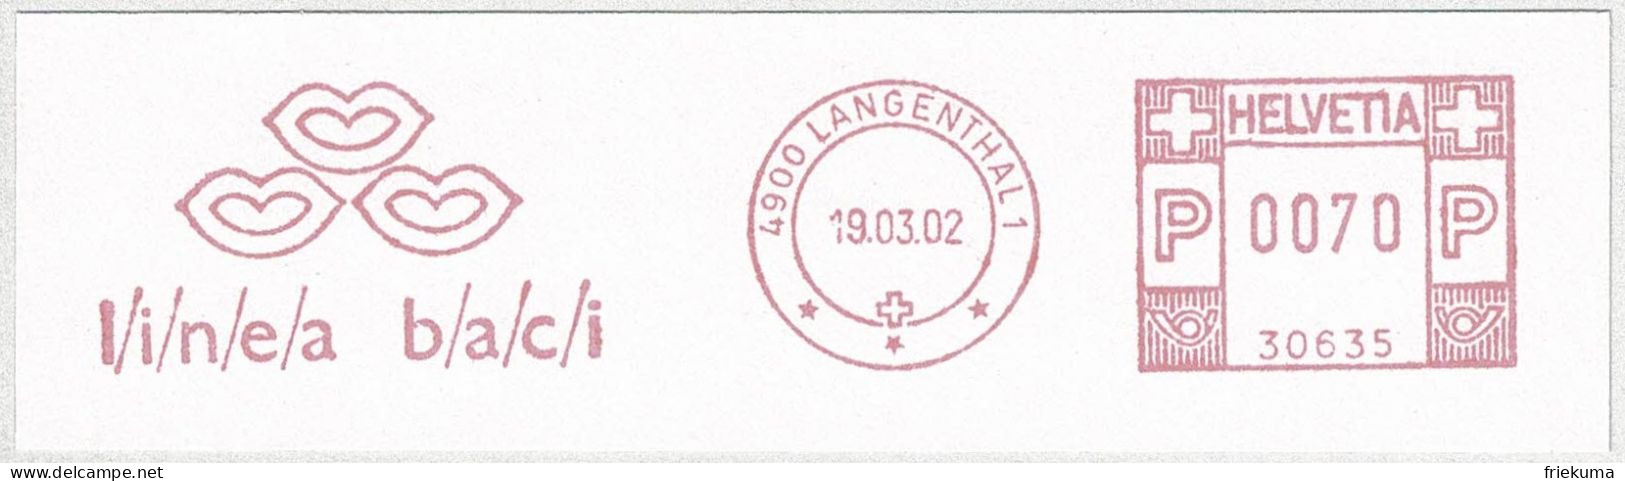 Schweiz / Helvetia 2002, Freistempel / EMA / Meterstamp Peyer + Co Langenthal, Bekleidung, Schuhe  - Frankiermaschinen (FraMA)